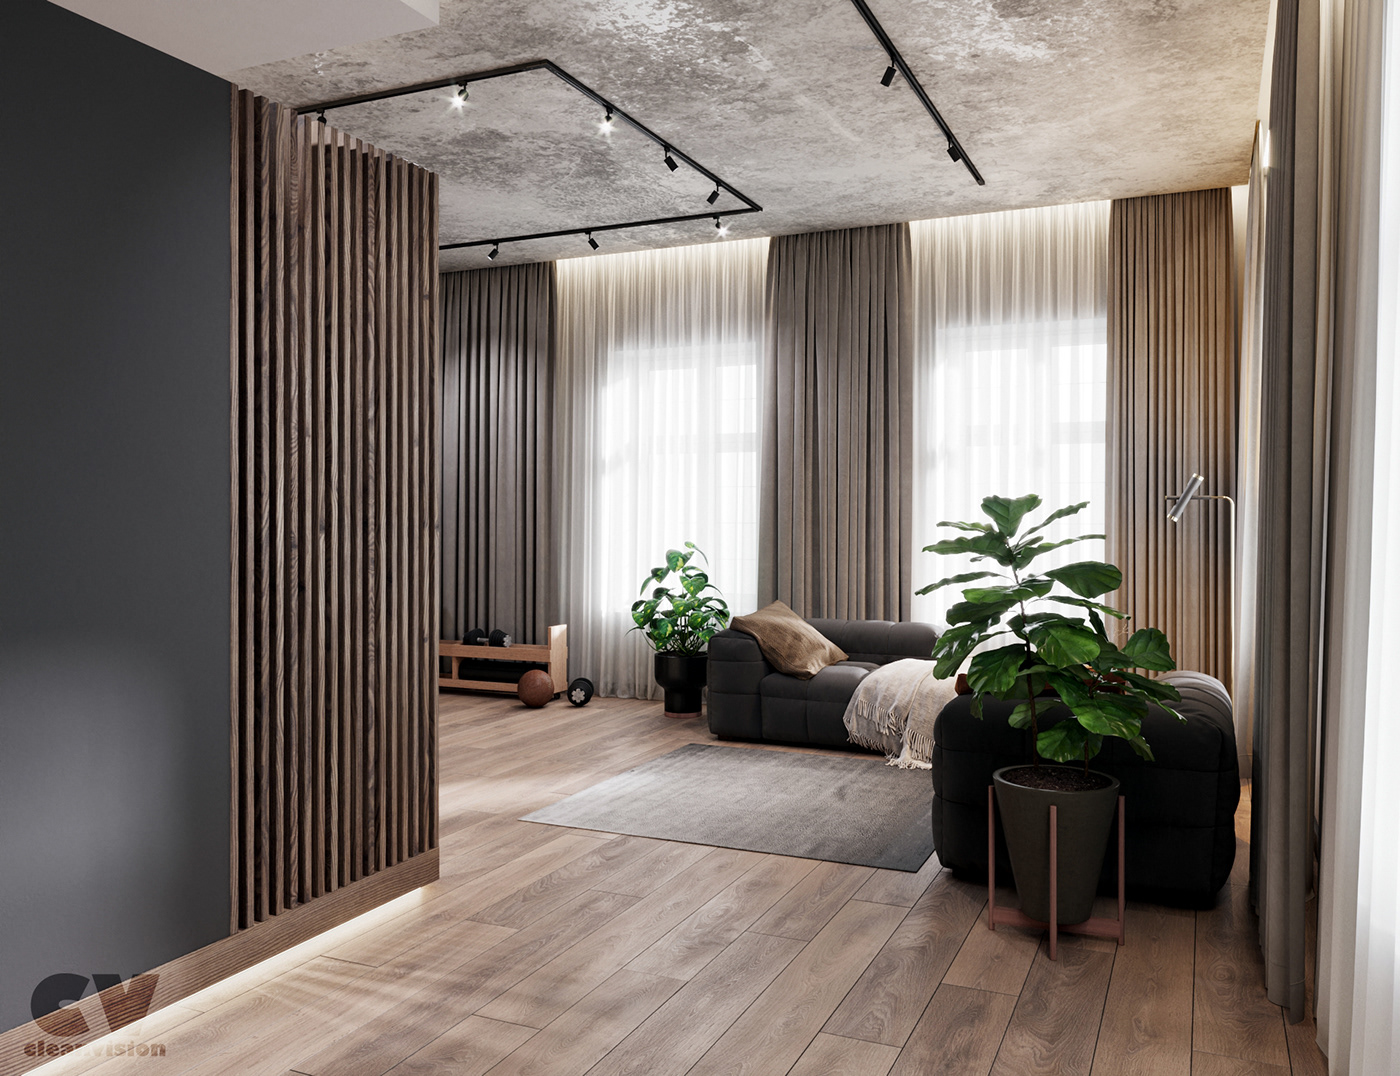 3dsmax apartments Collaboration corona designers exterior Interior lumion visualization